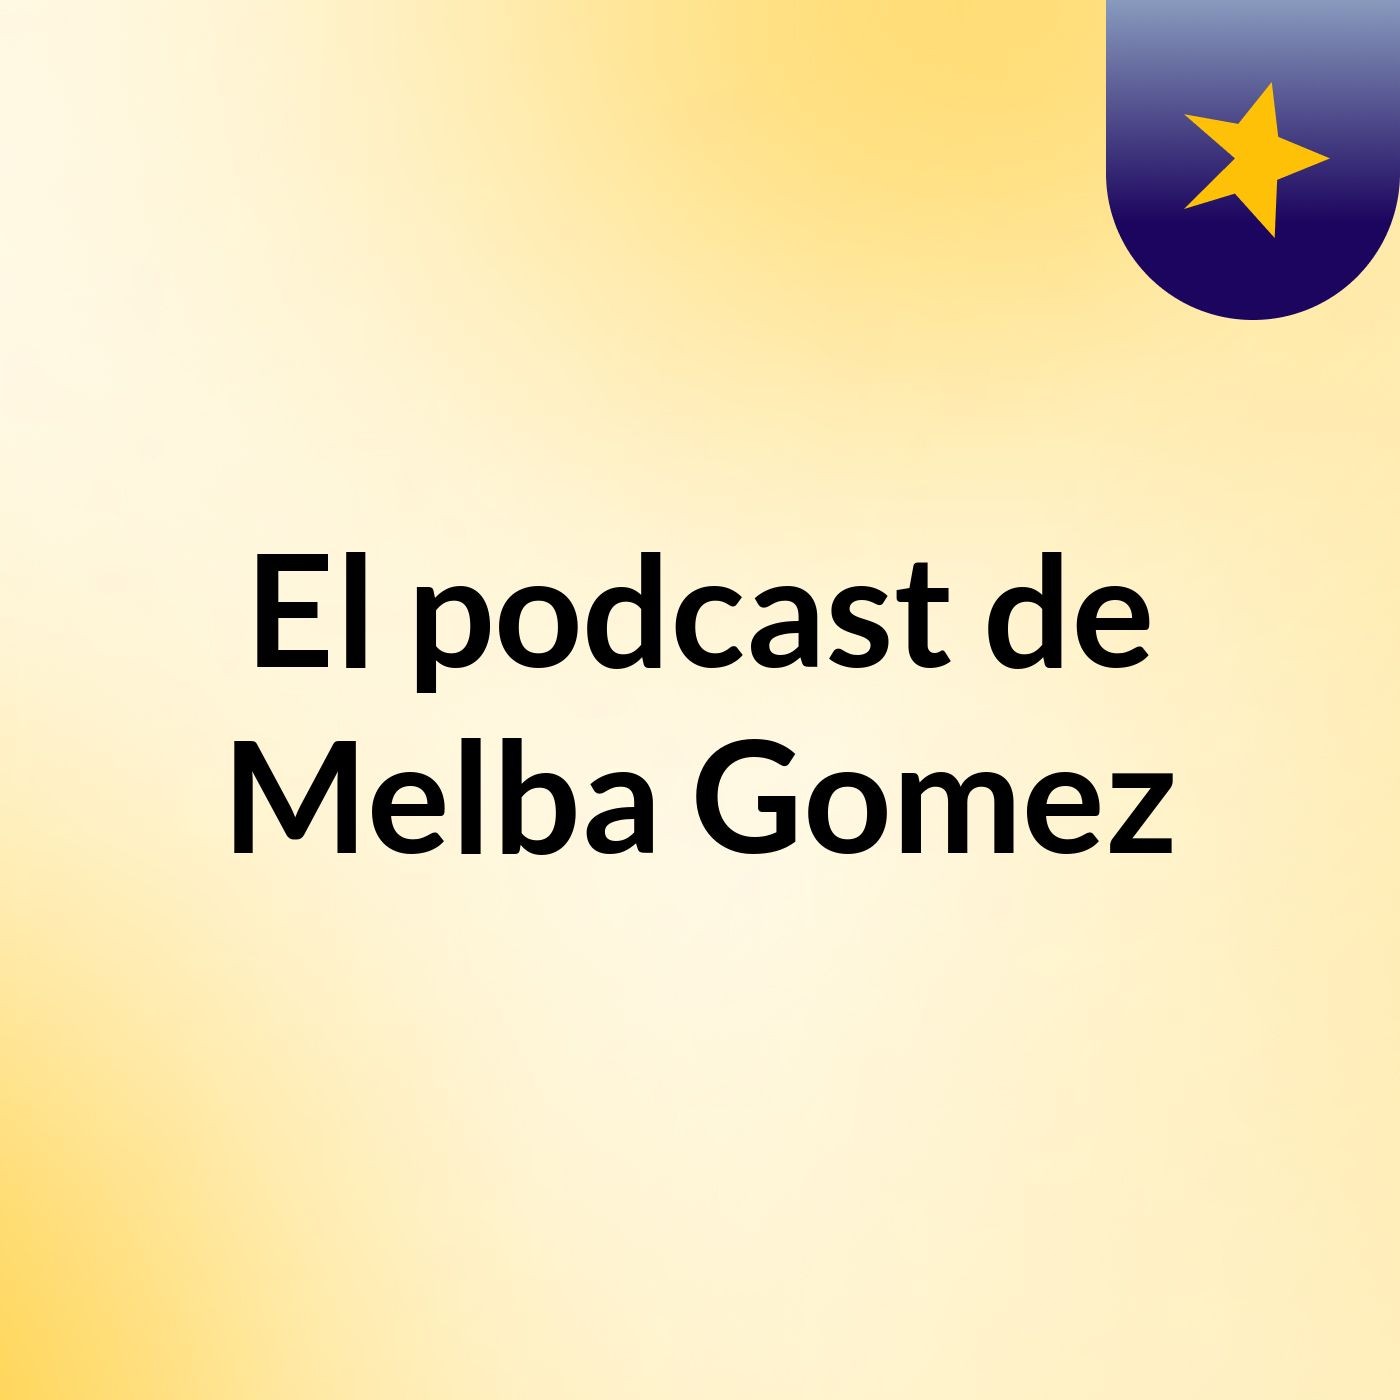 El podcast de Melba Gomez